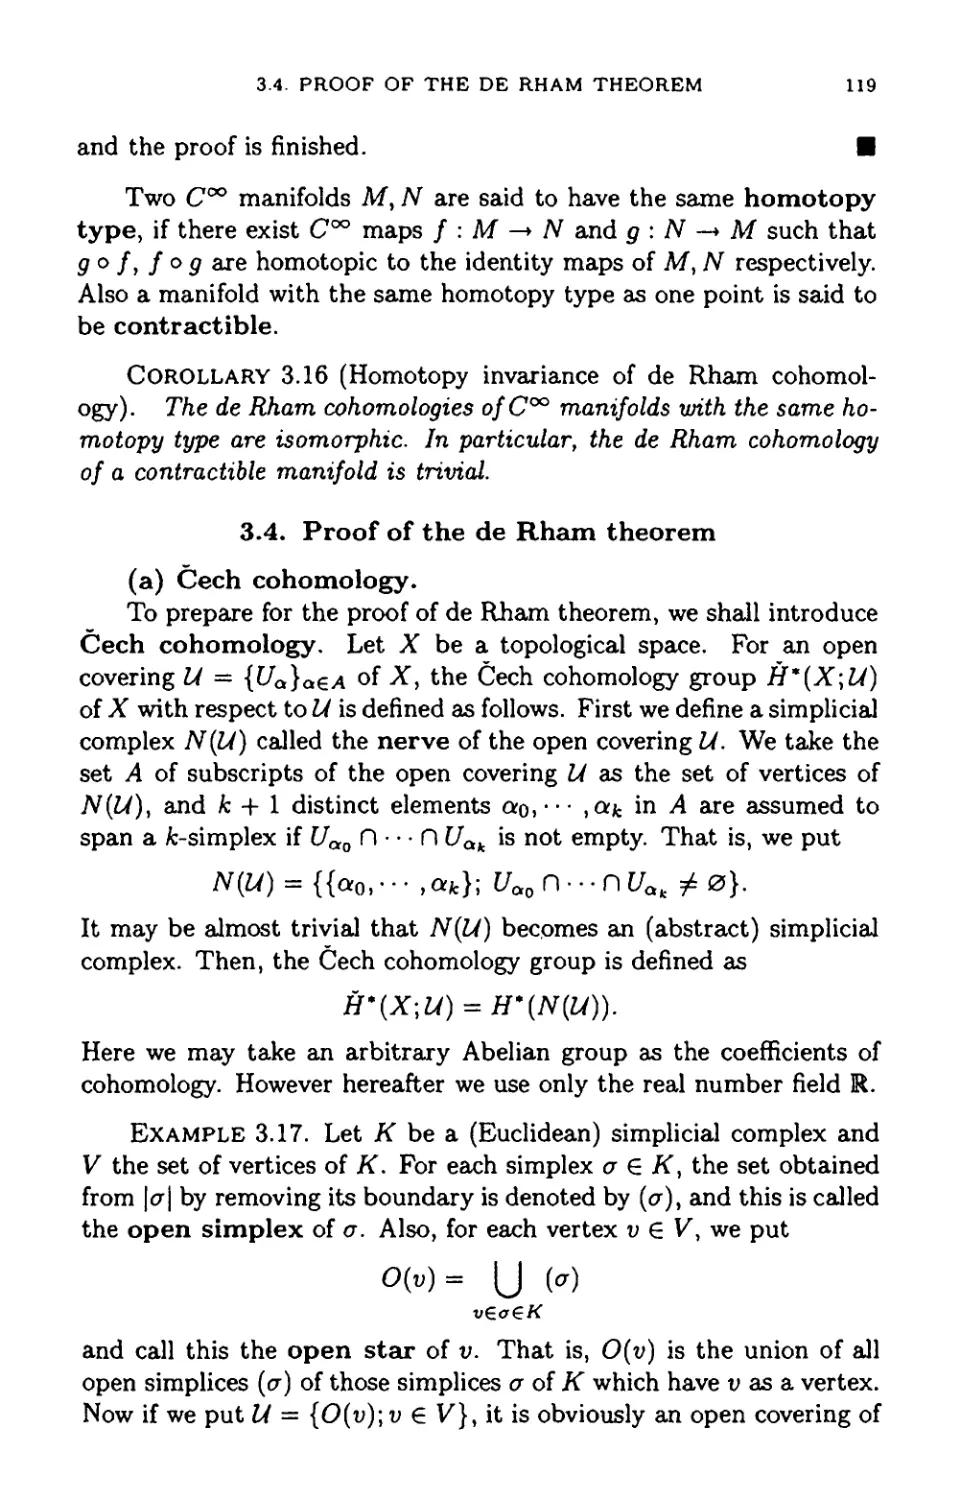 3.4 Proof of the de Rham theorem